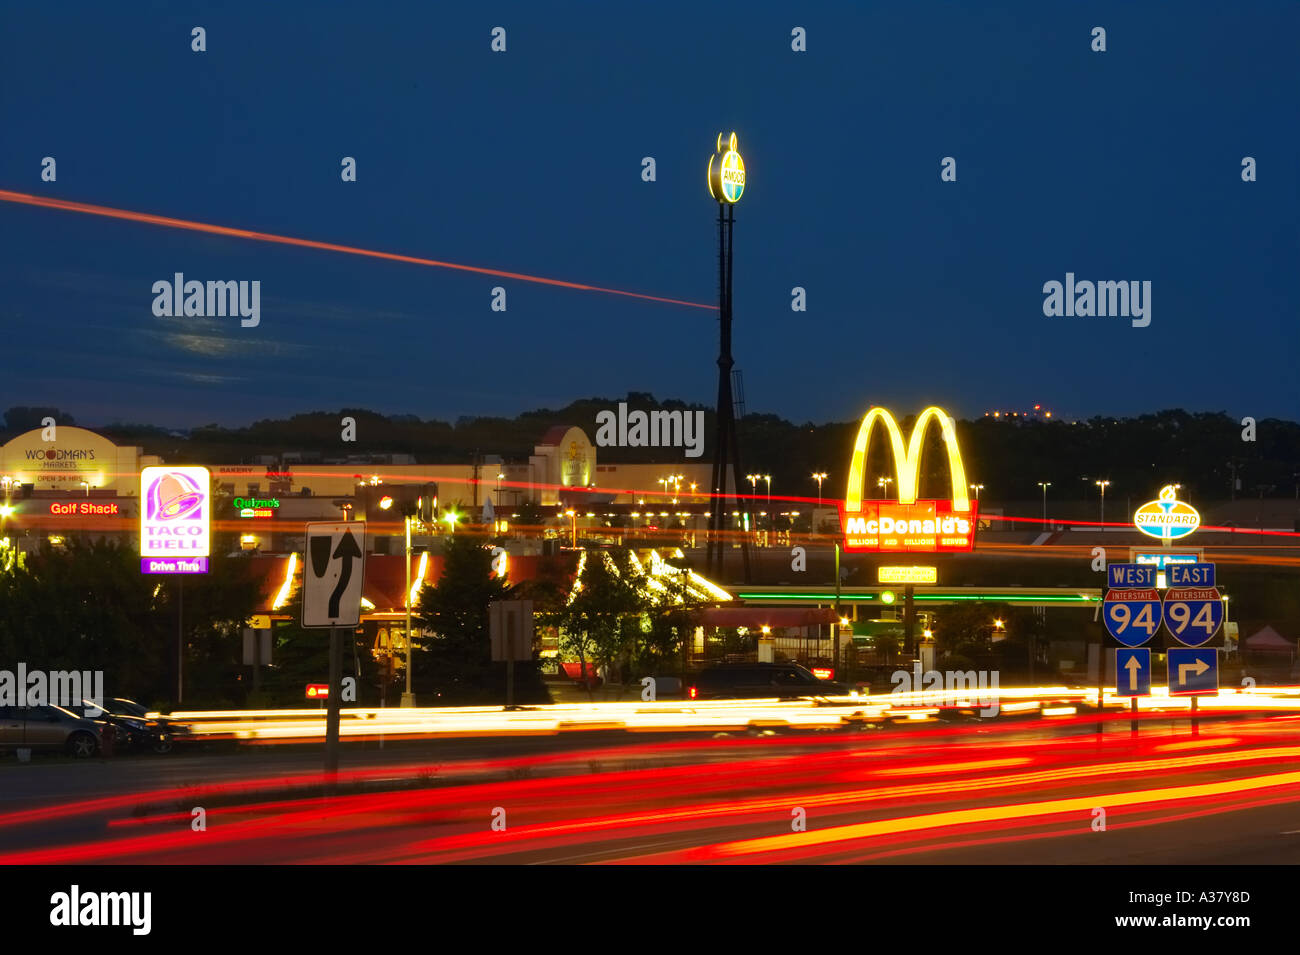 WISCONSIN Kenosha Fast food restaurants near interstate highway night signs and blurred car lights Stock Photo